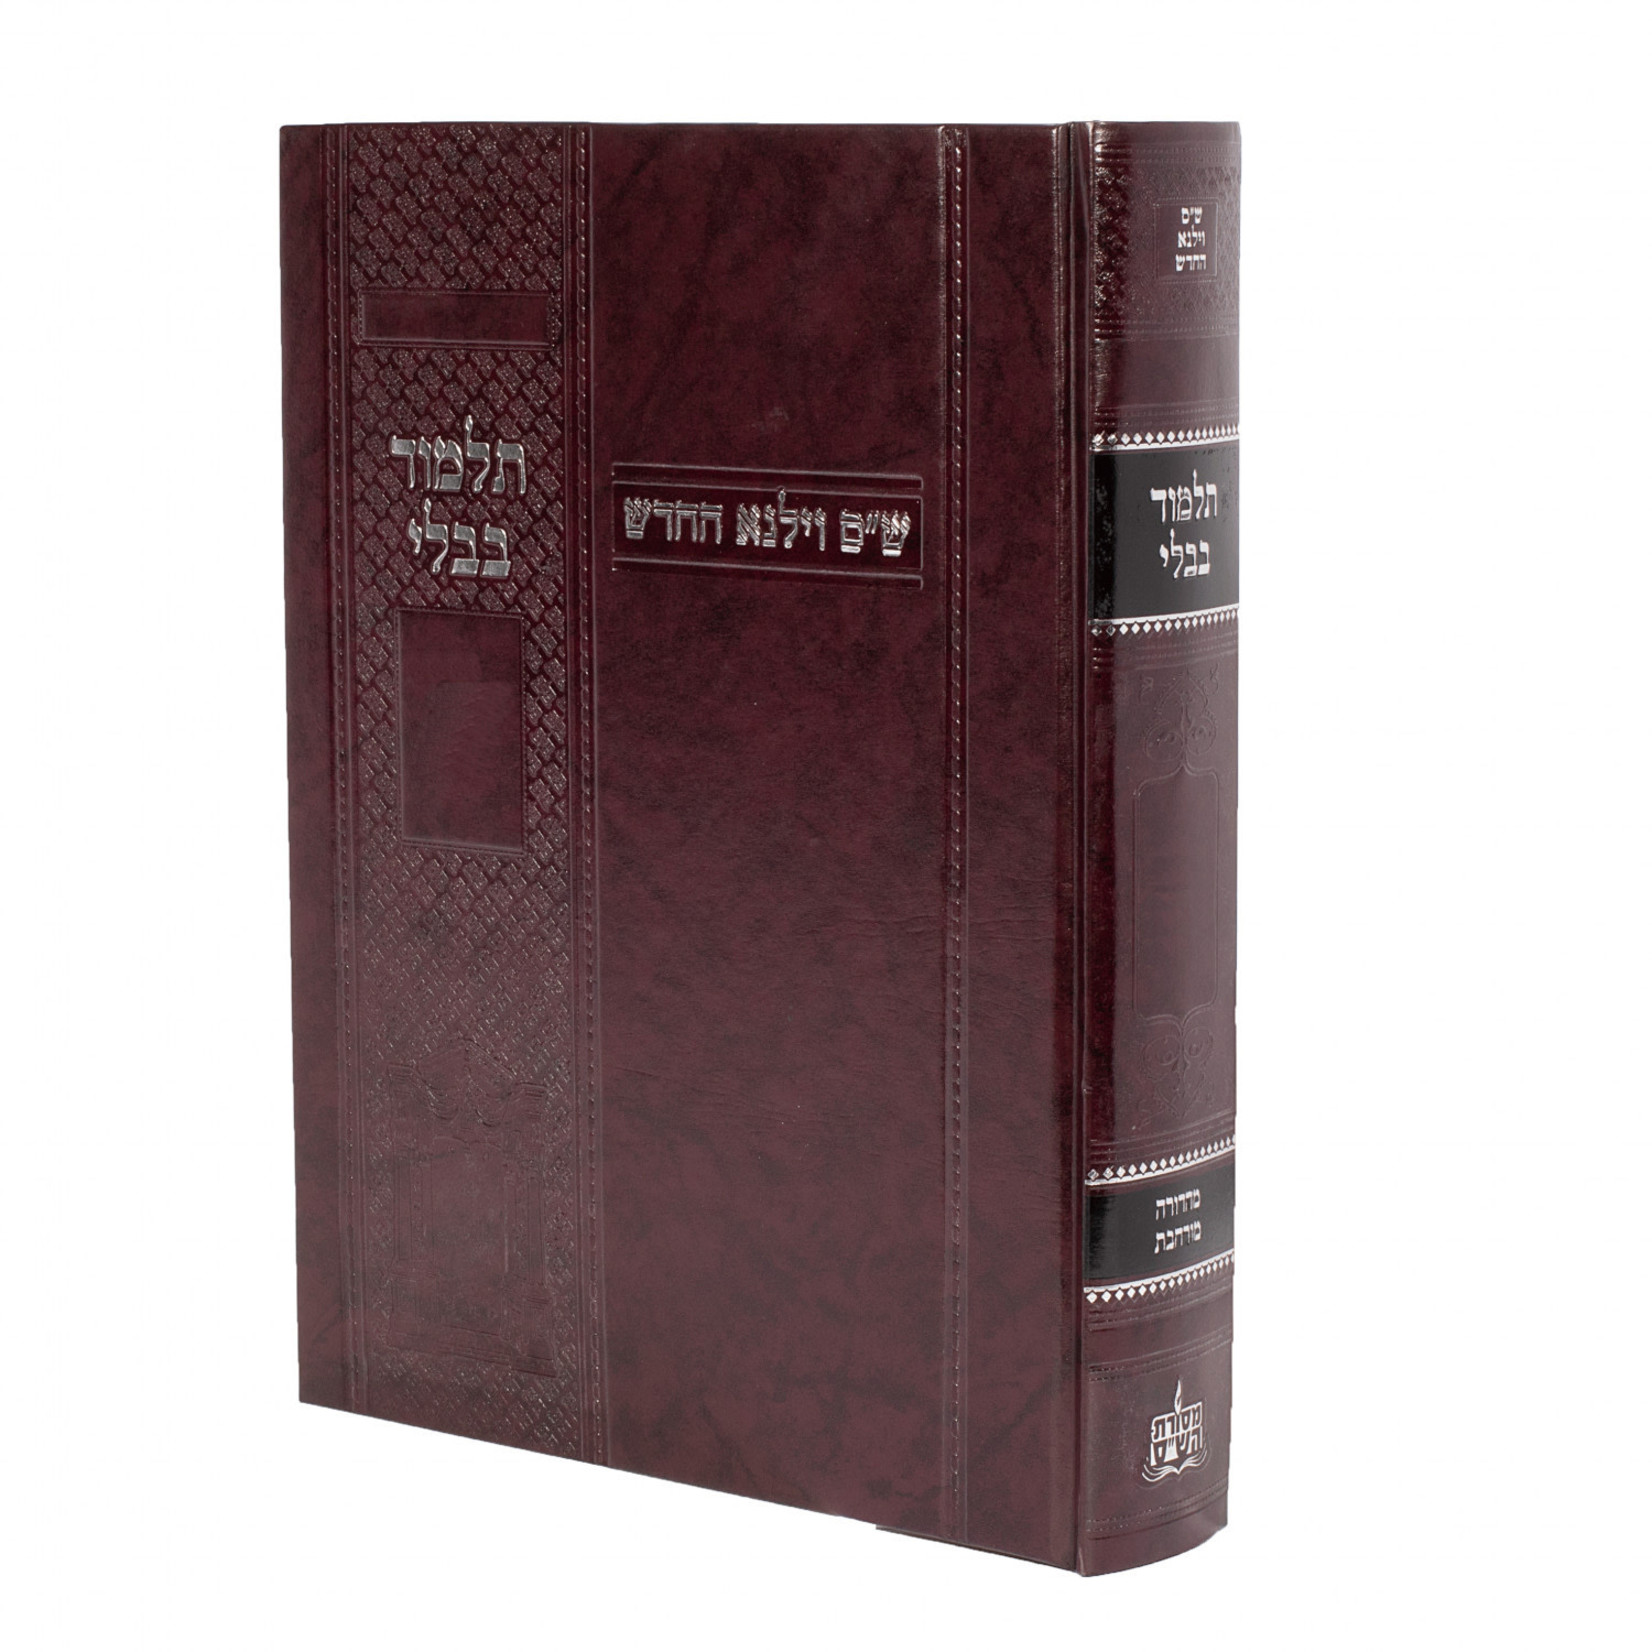 Talmud - Masechet Bava Kamma